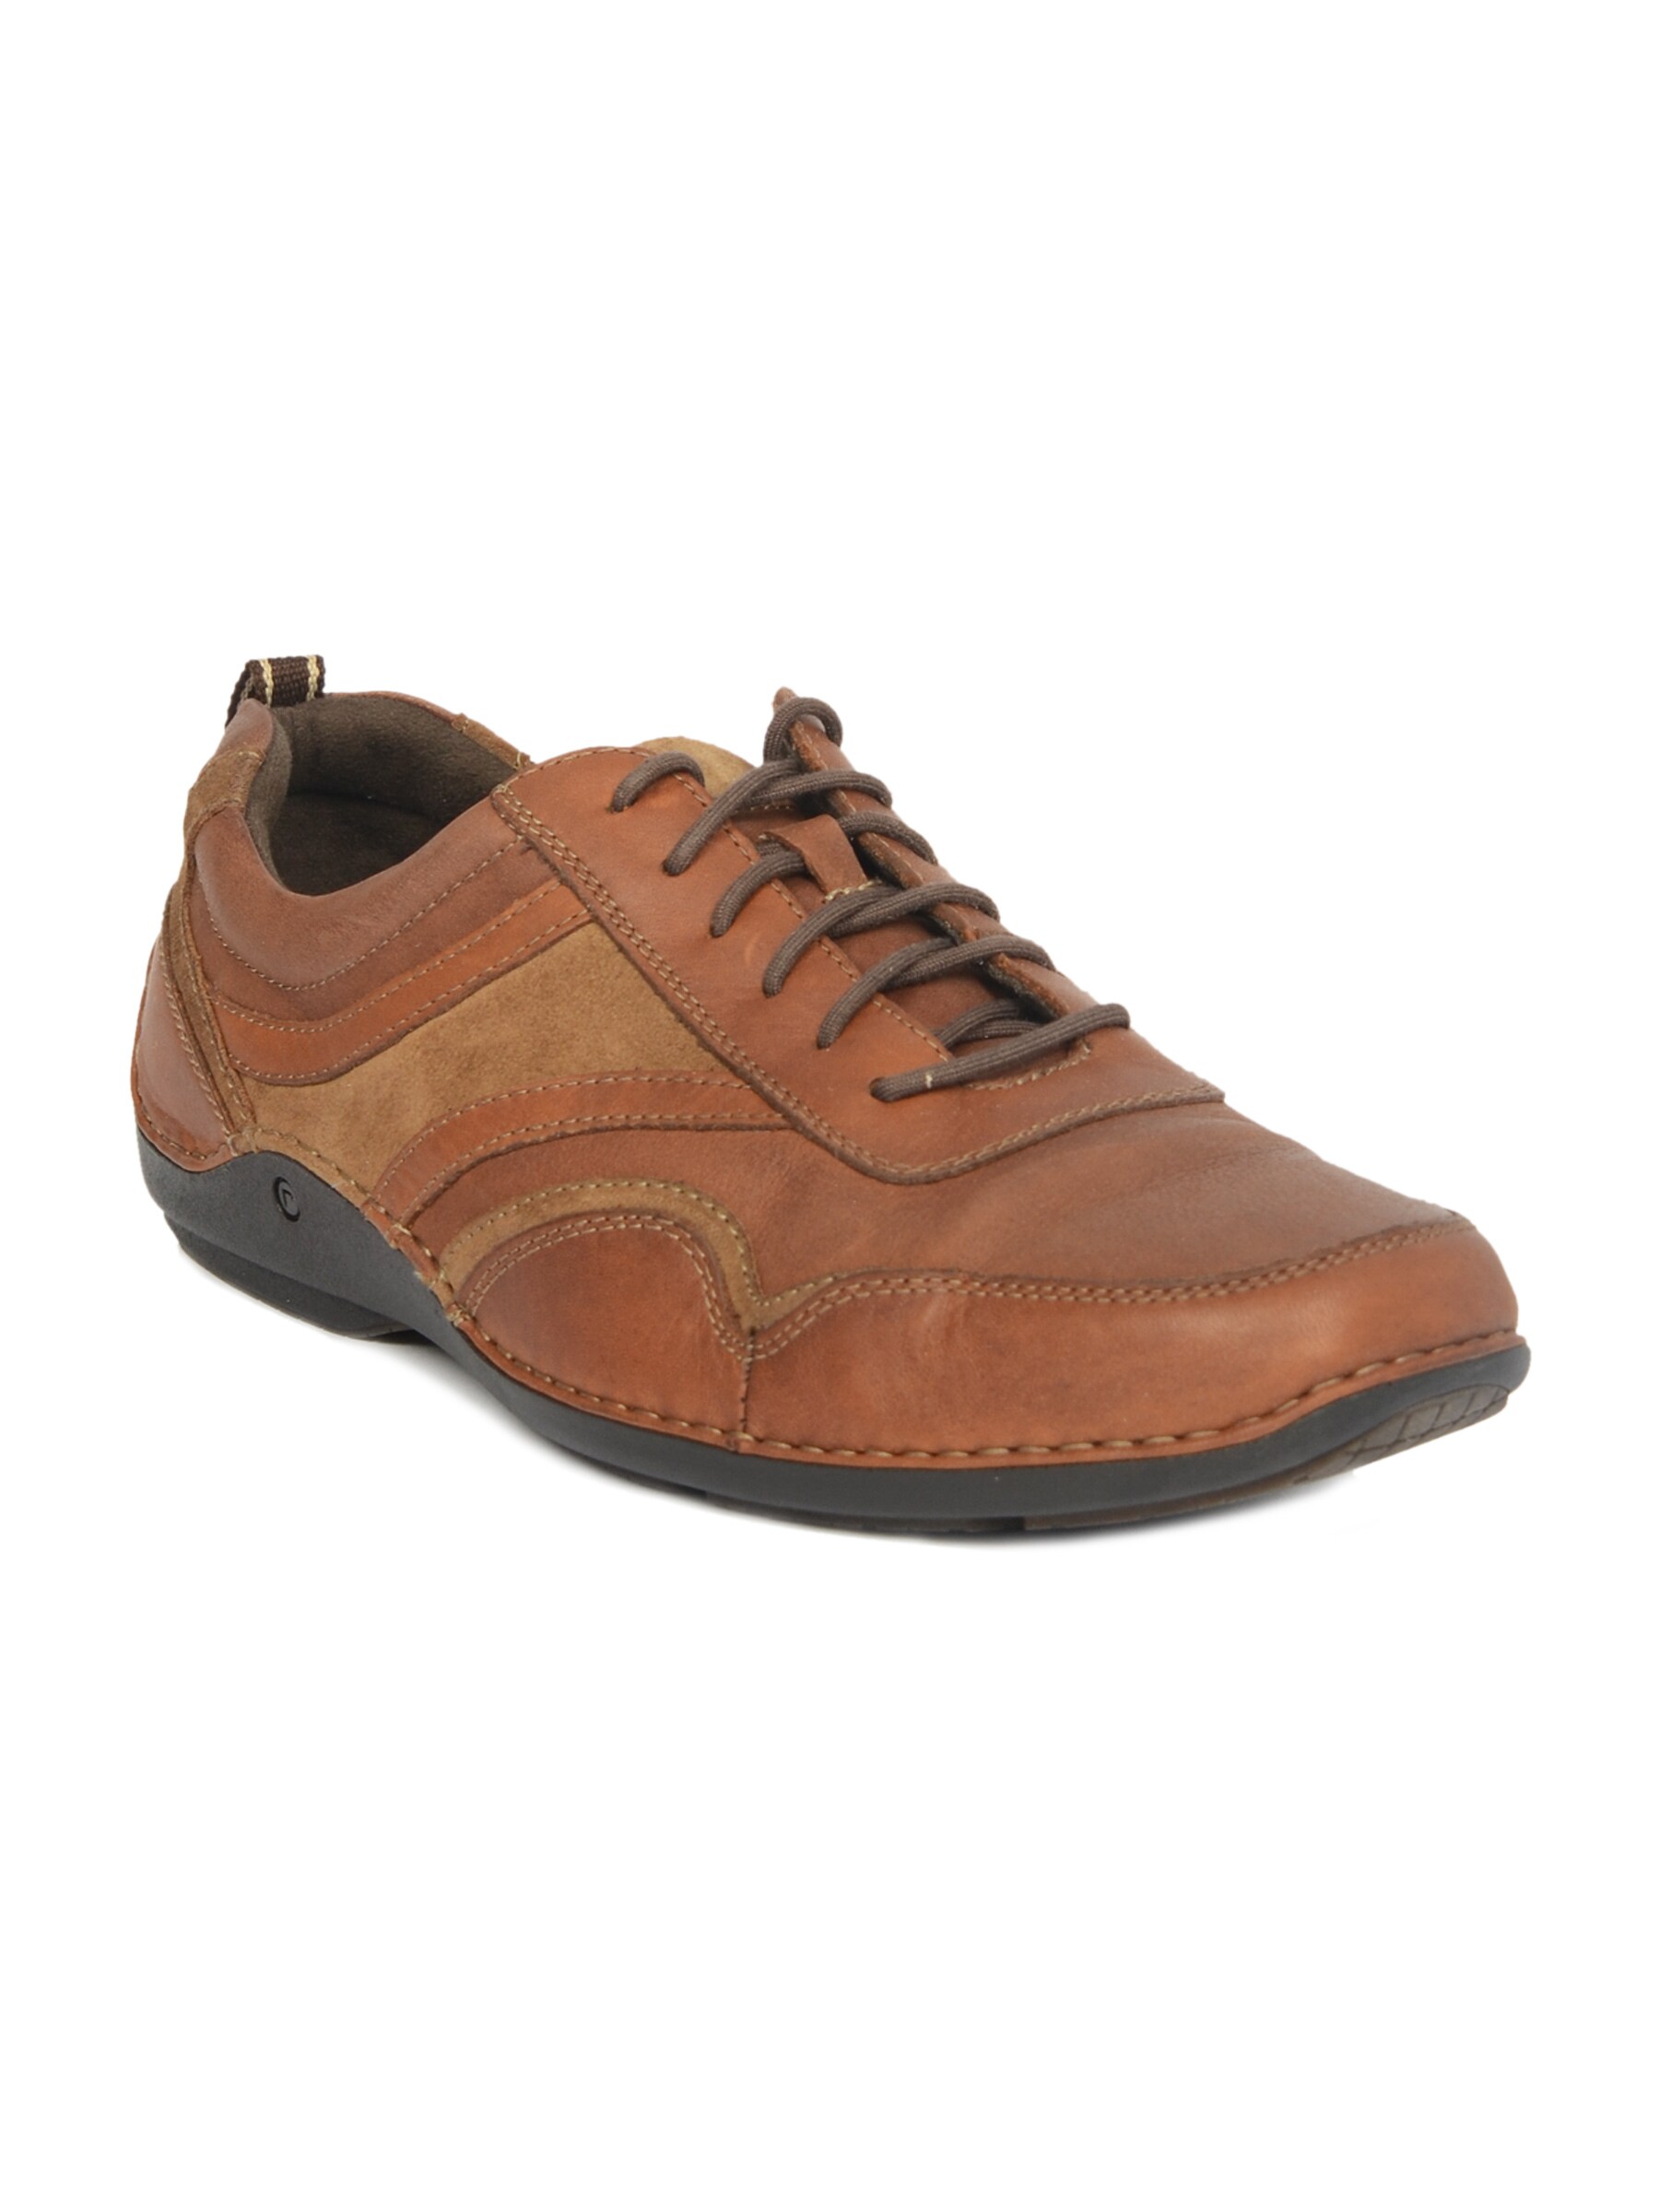 Rockport Men's Casual Brown Shoe